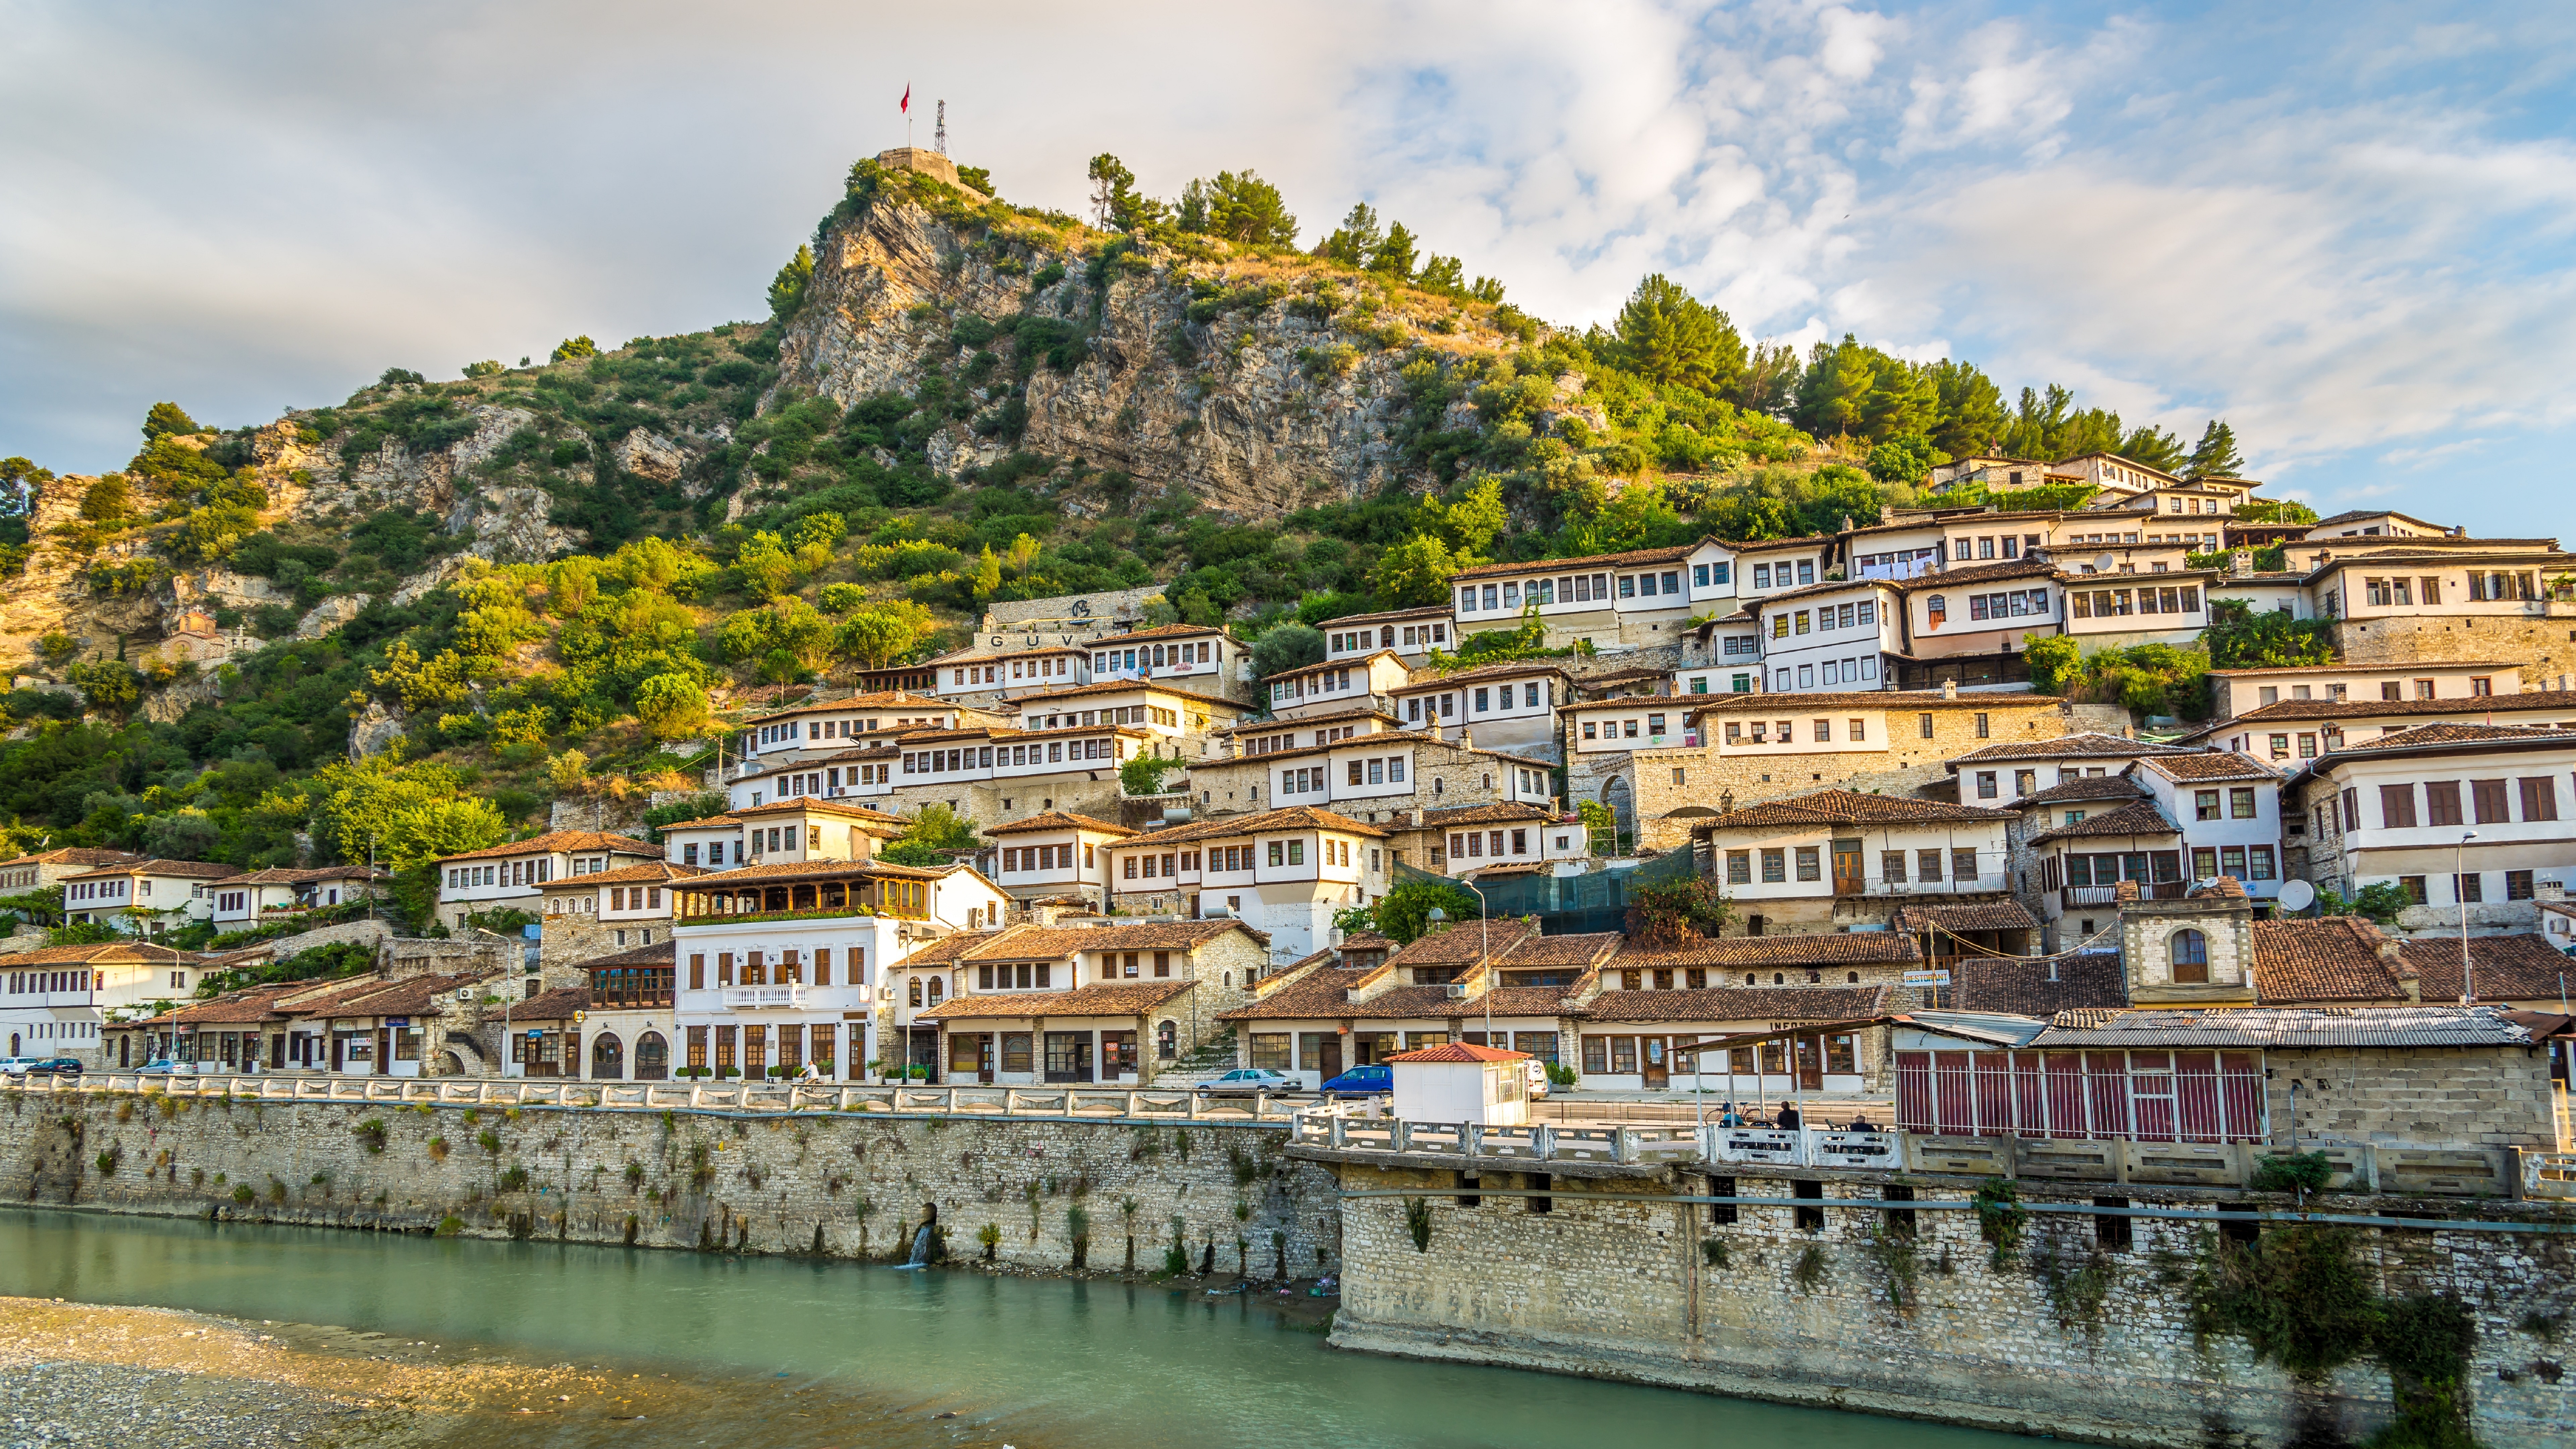 Berat City Albania for 7680 x 4320 8K Ultra HD resolution